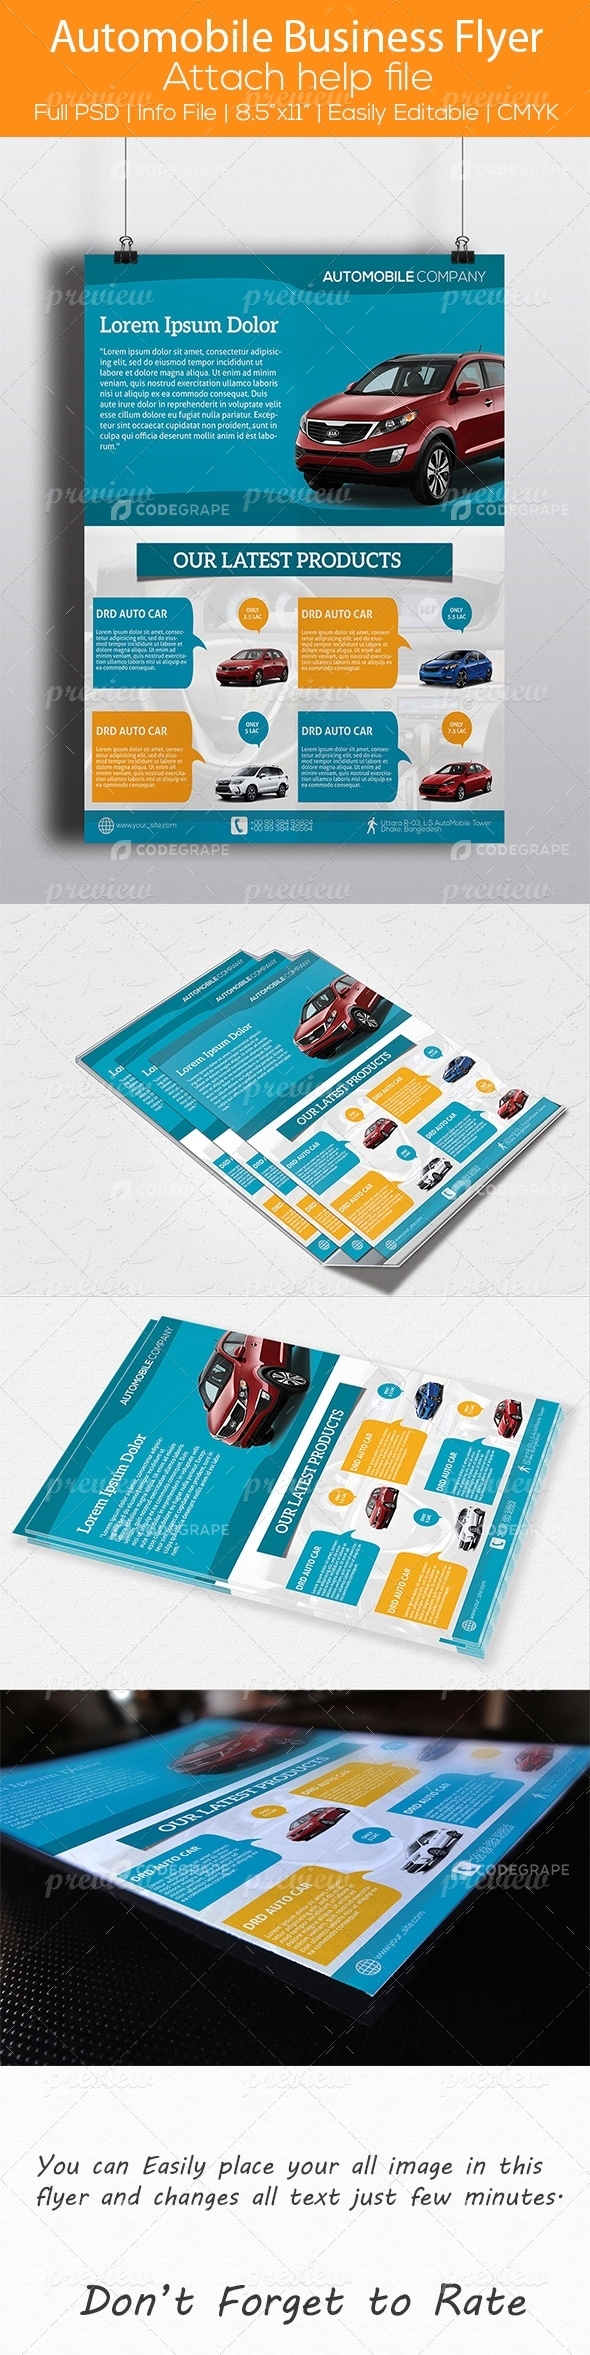 Automobile Business Flyer